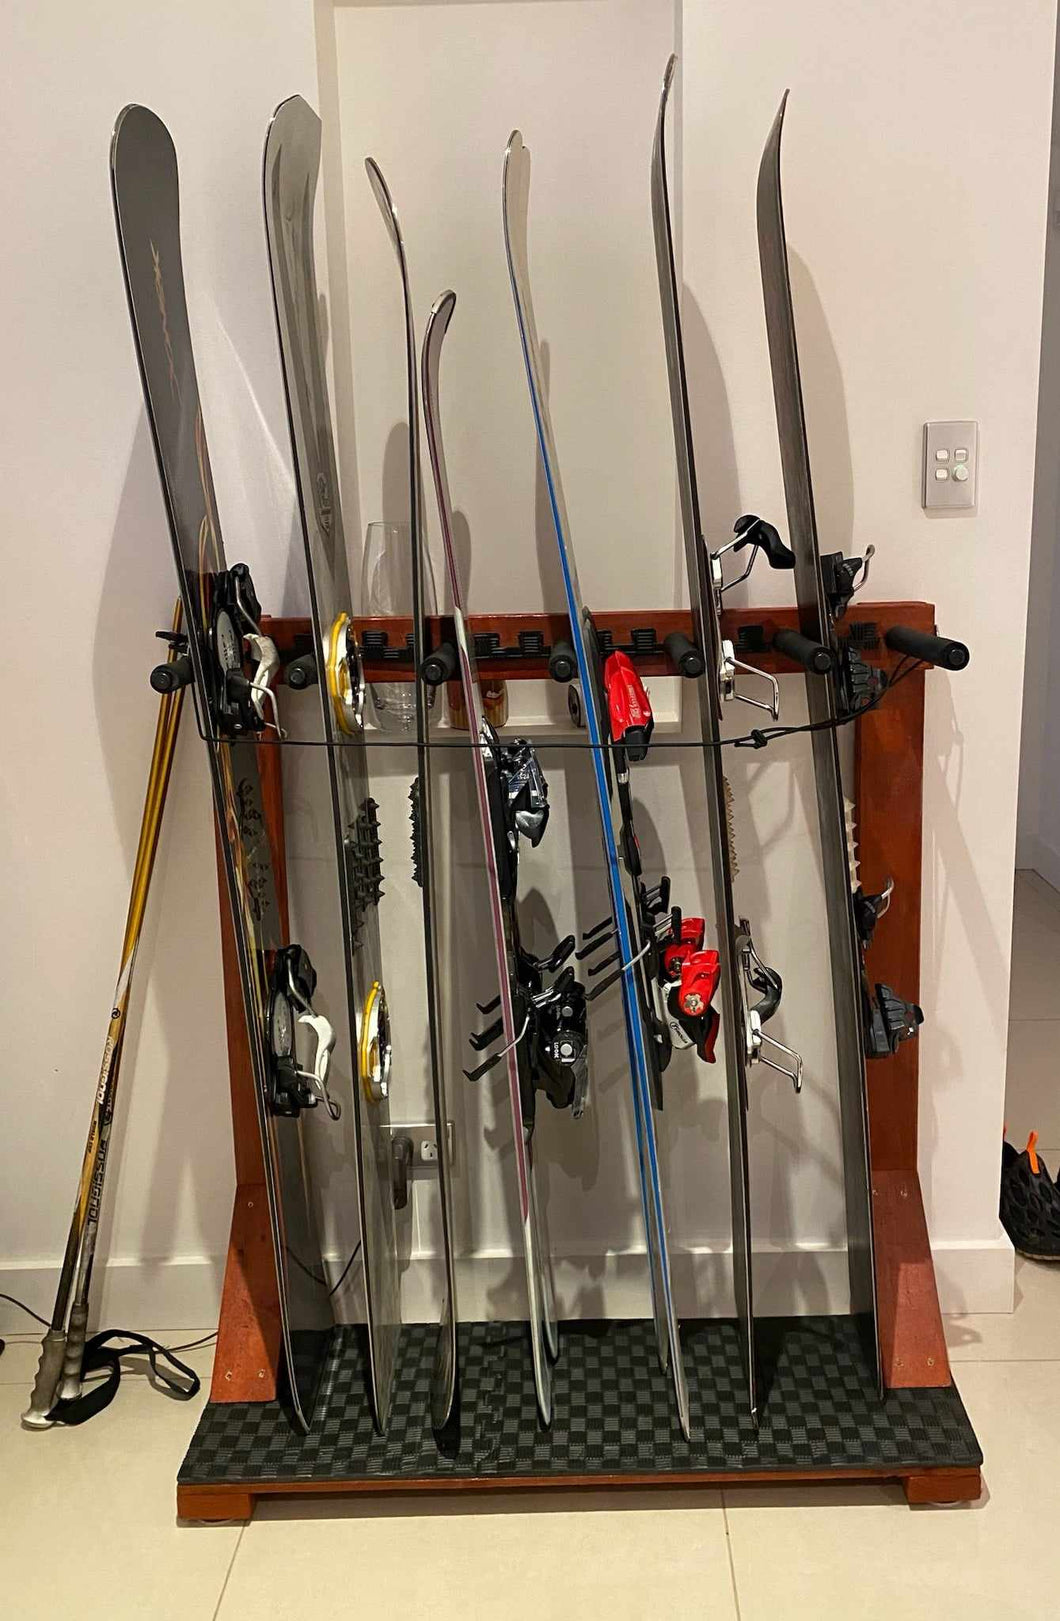 Snowboard/ Ski Rack